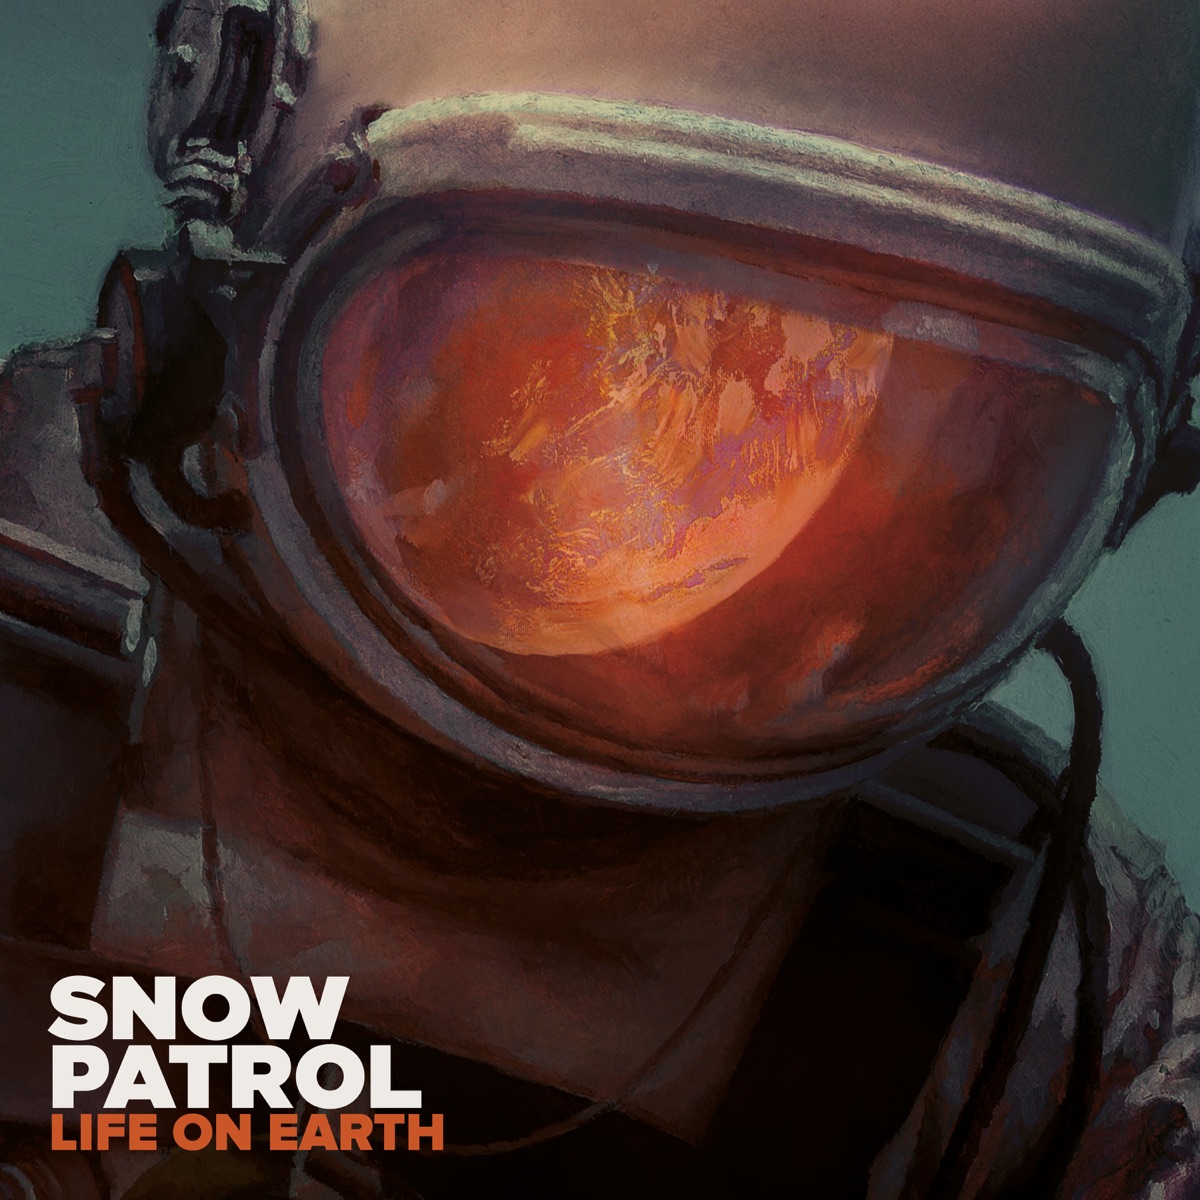 Snow Patrol Life on Earth cover artwork